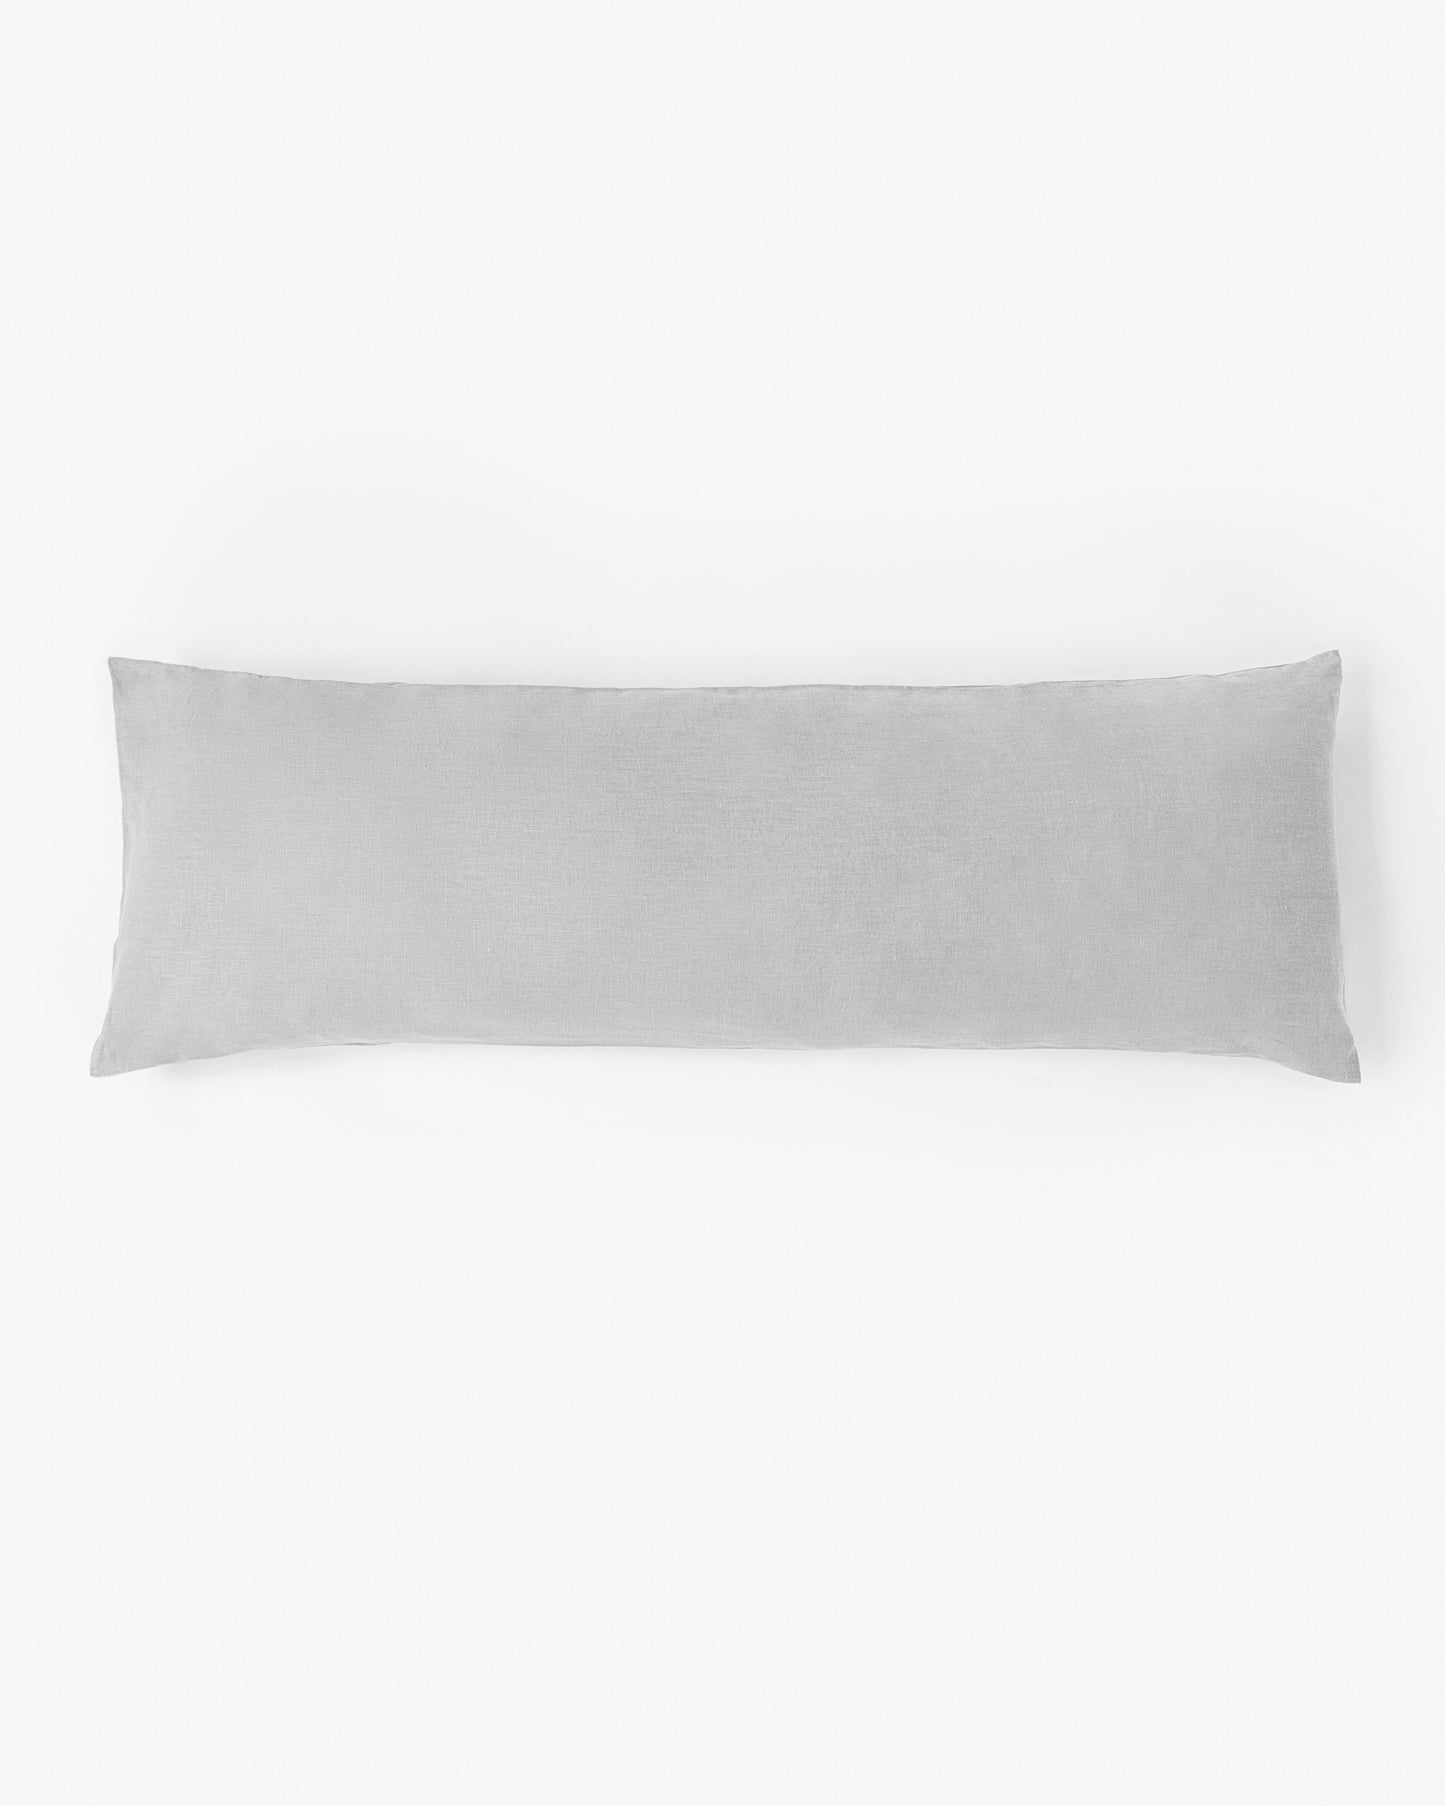 Body pillowcase in Light gray - MagicLinen